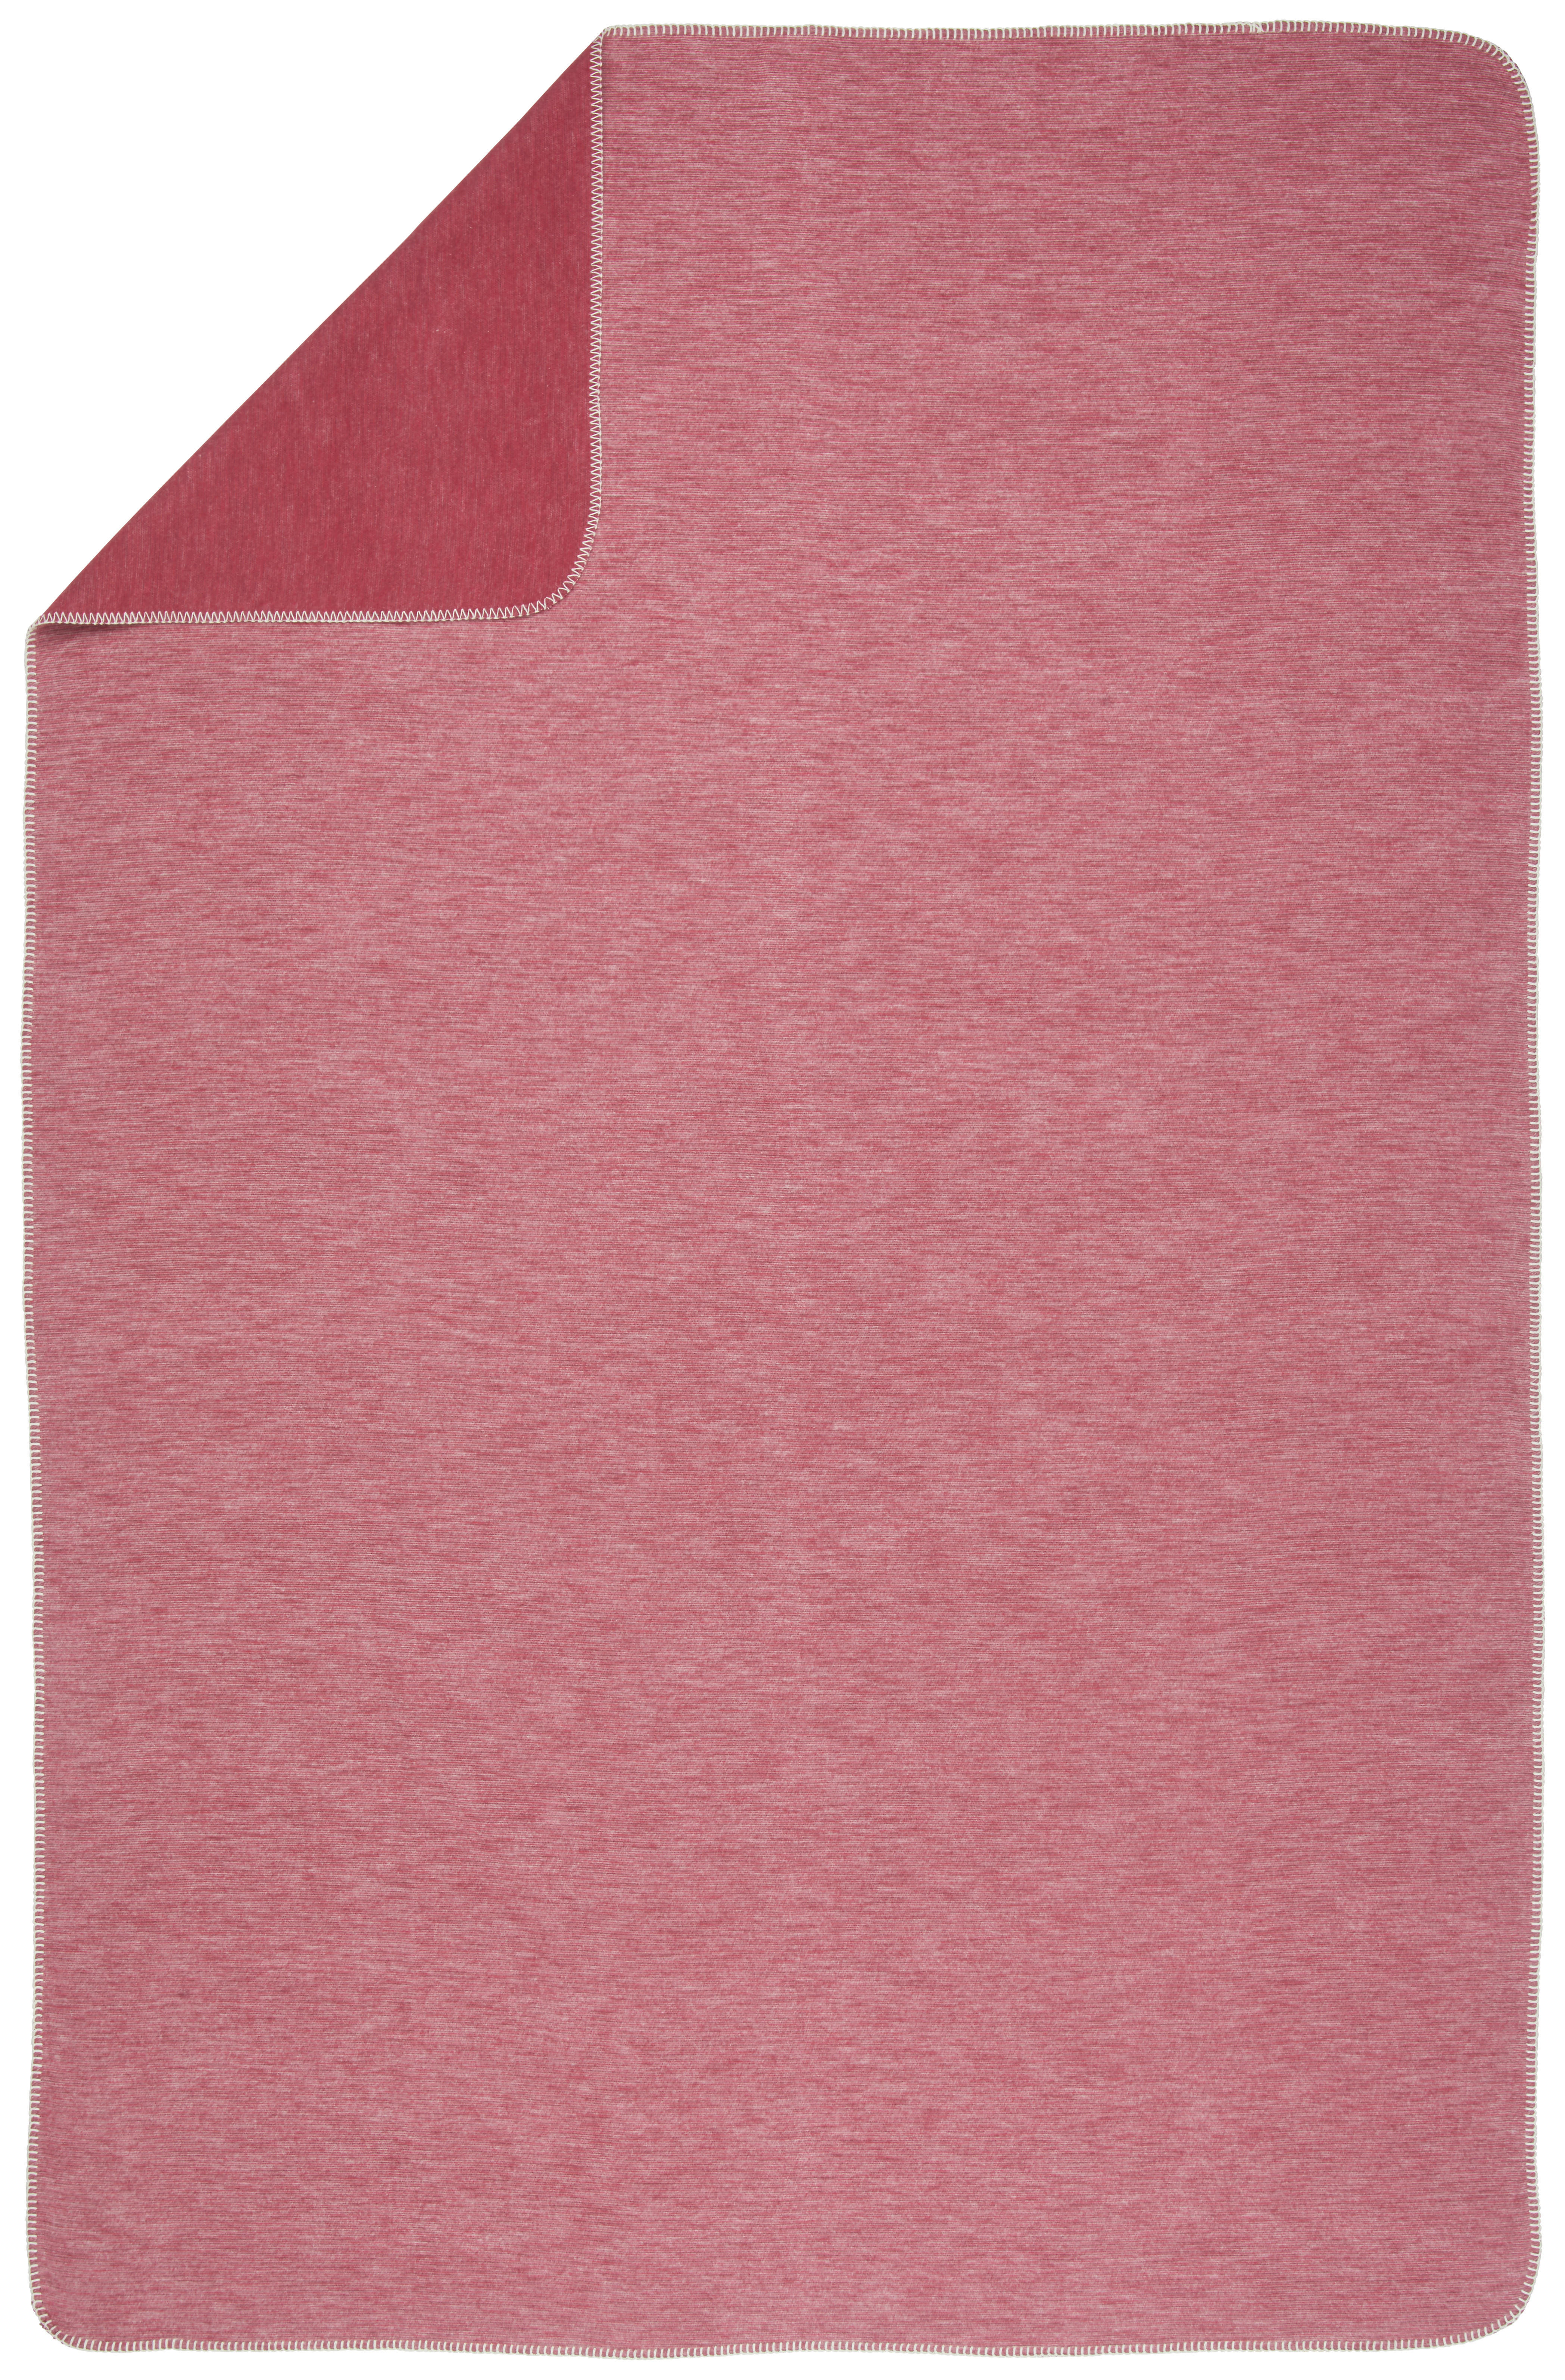 PLAID Leela 140/200 cm  - Rot, Basics, Textil (140/200cm) - Bio:Vio